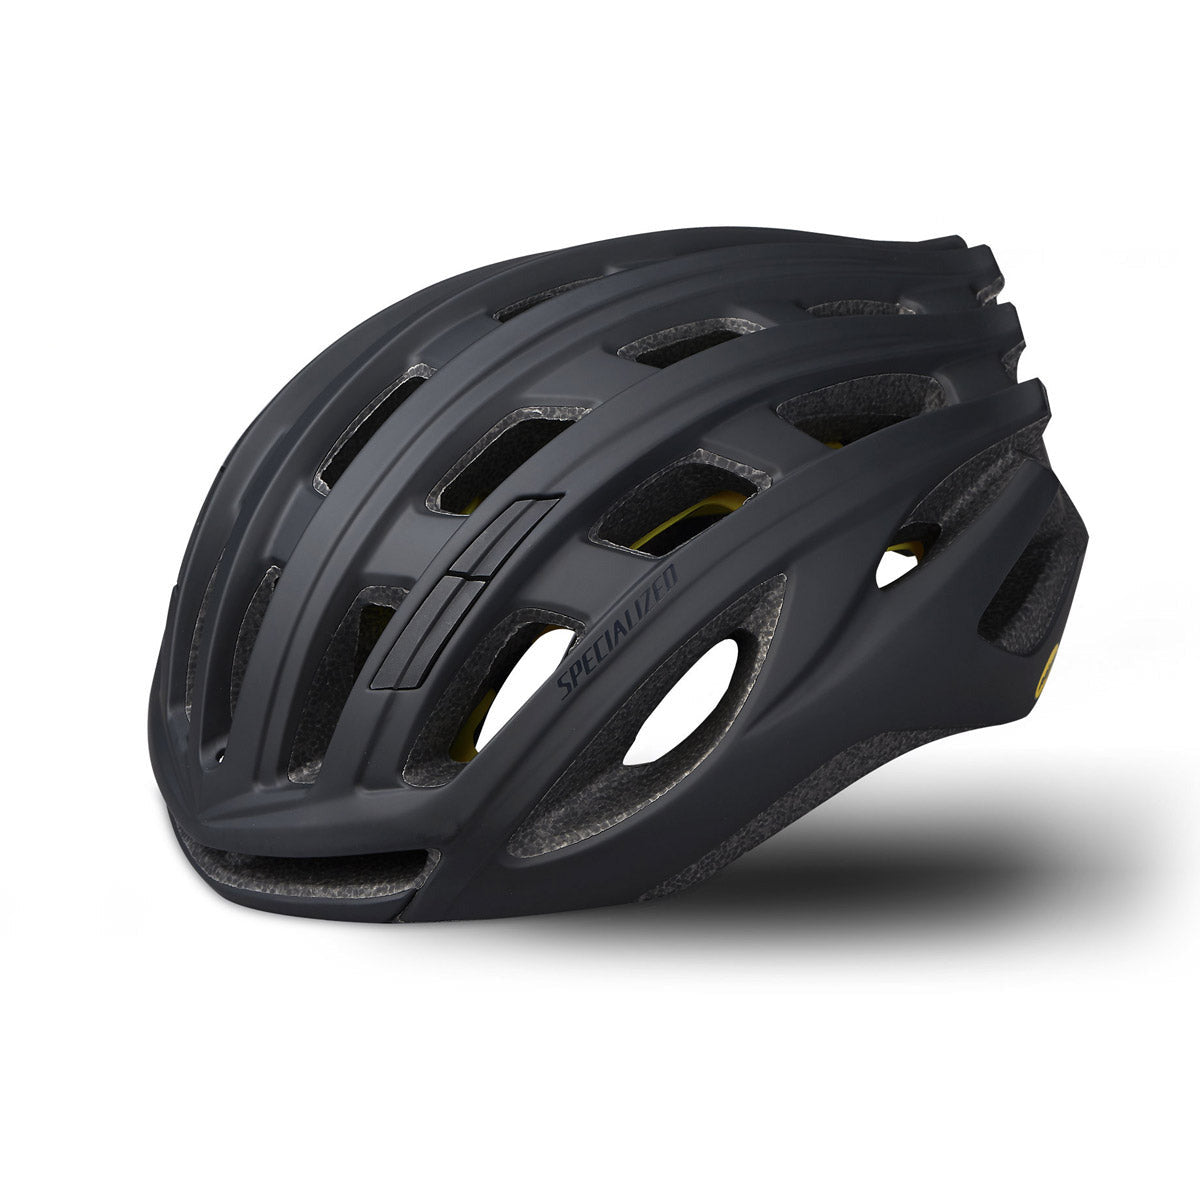 Specialized Propero 3 helmet - Black